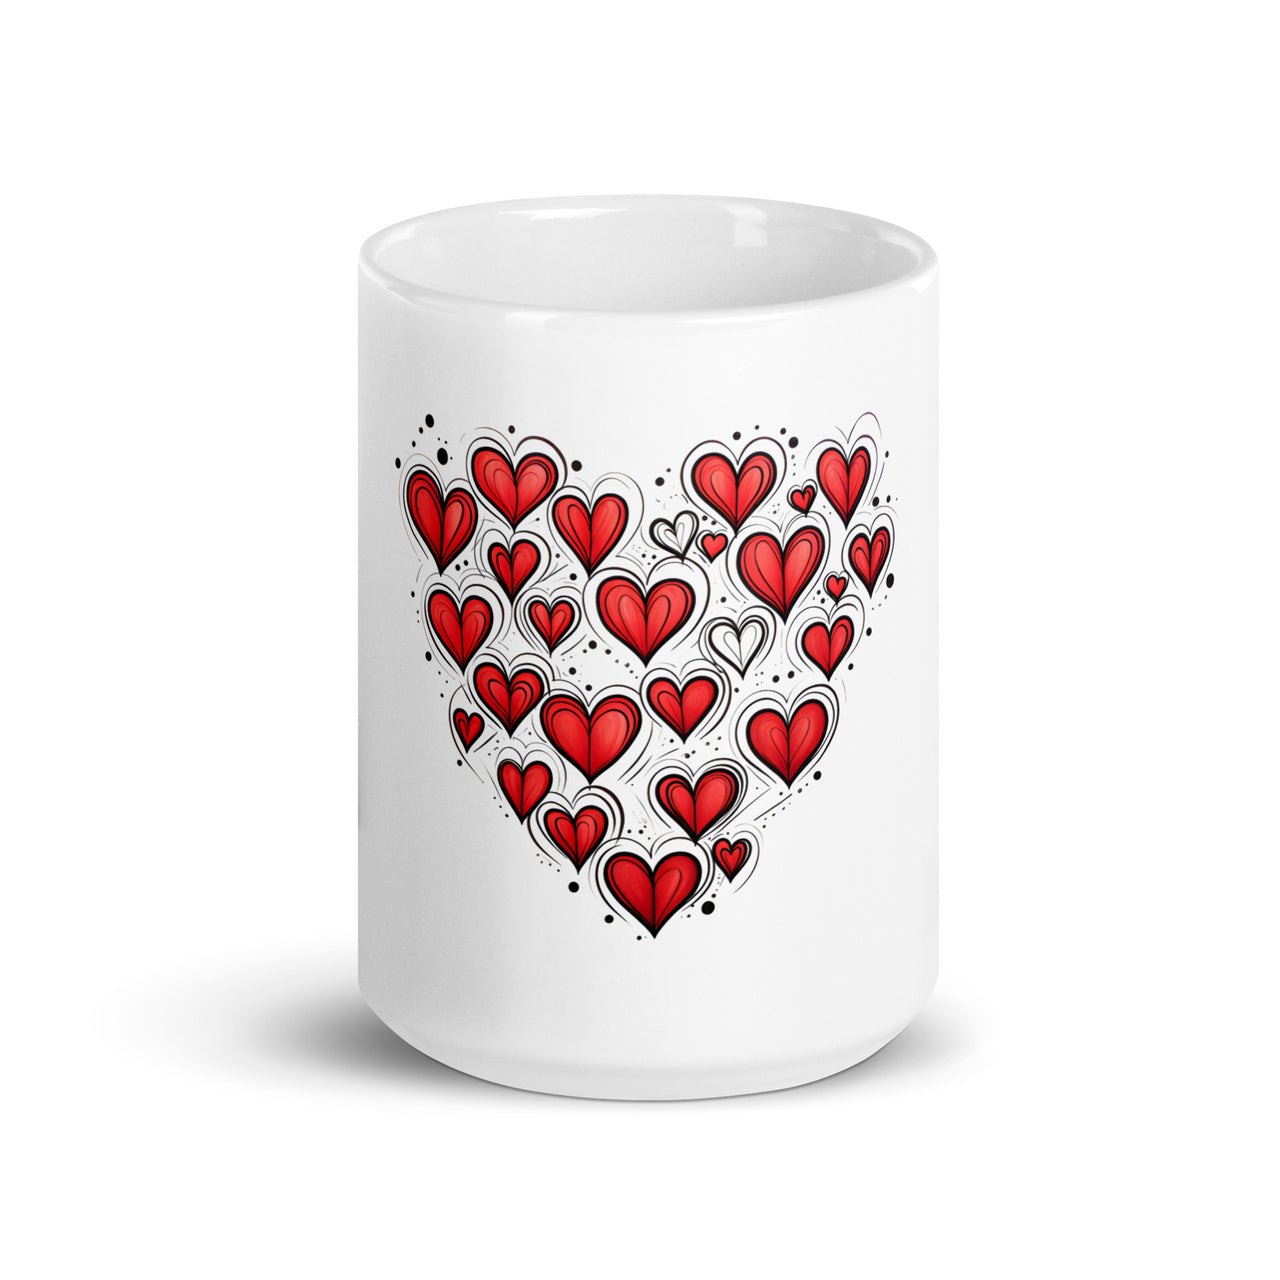 Love Radiates: Sketched Hearts White Mug